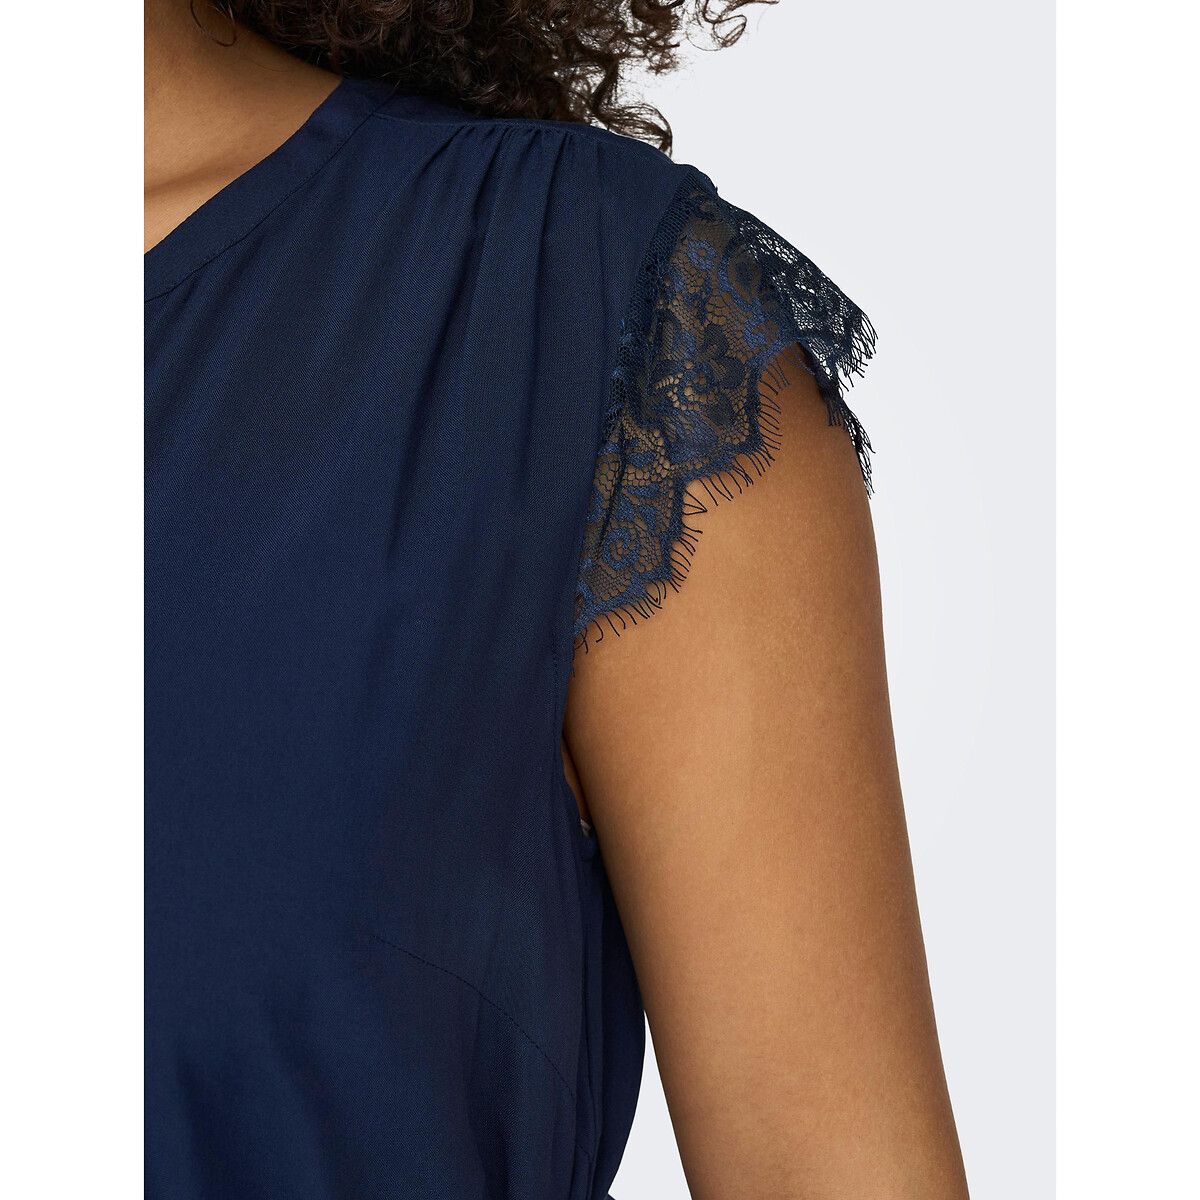 Платье Короткое с завязками 52 синий LaRedoute, размер 52 - фото 4